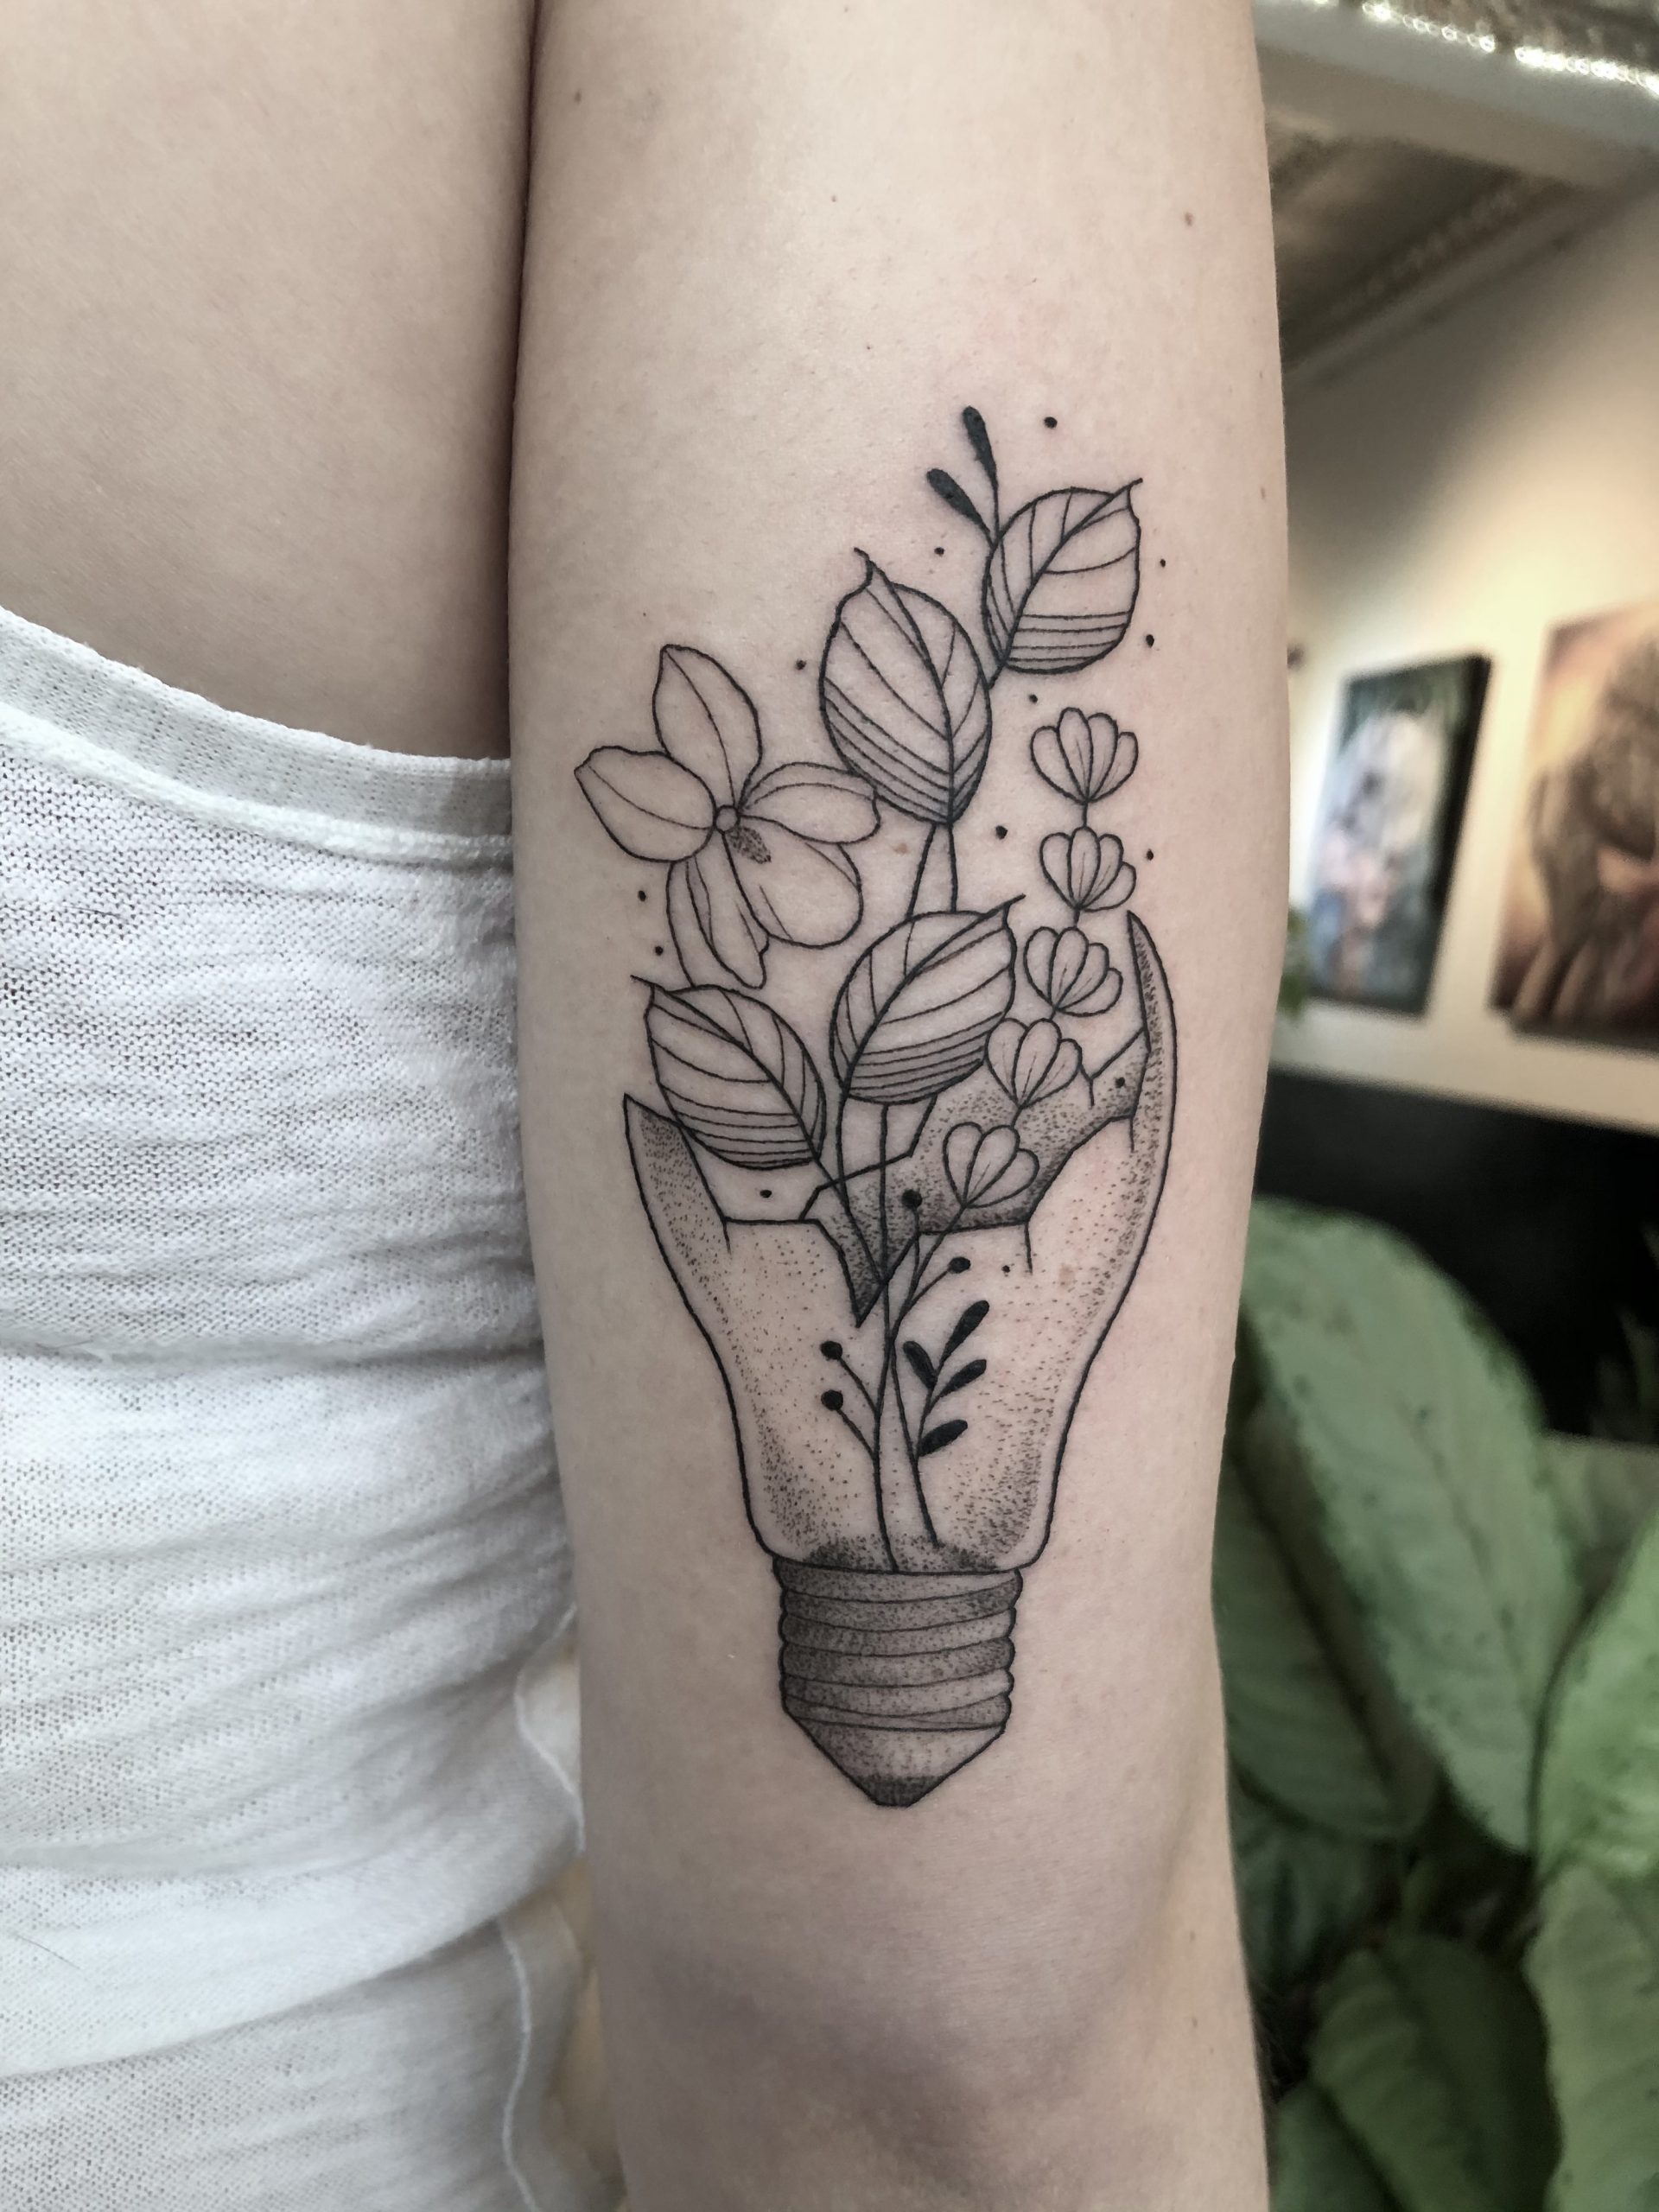 broken-lighbulb-with-flowers-tattoo